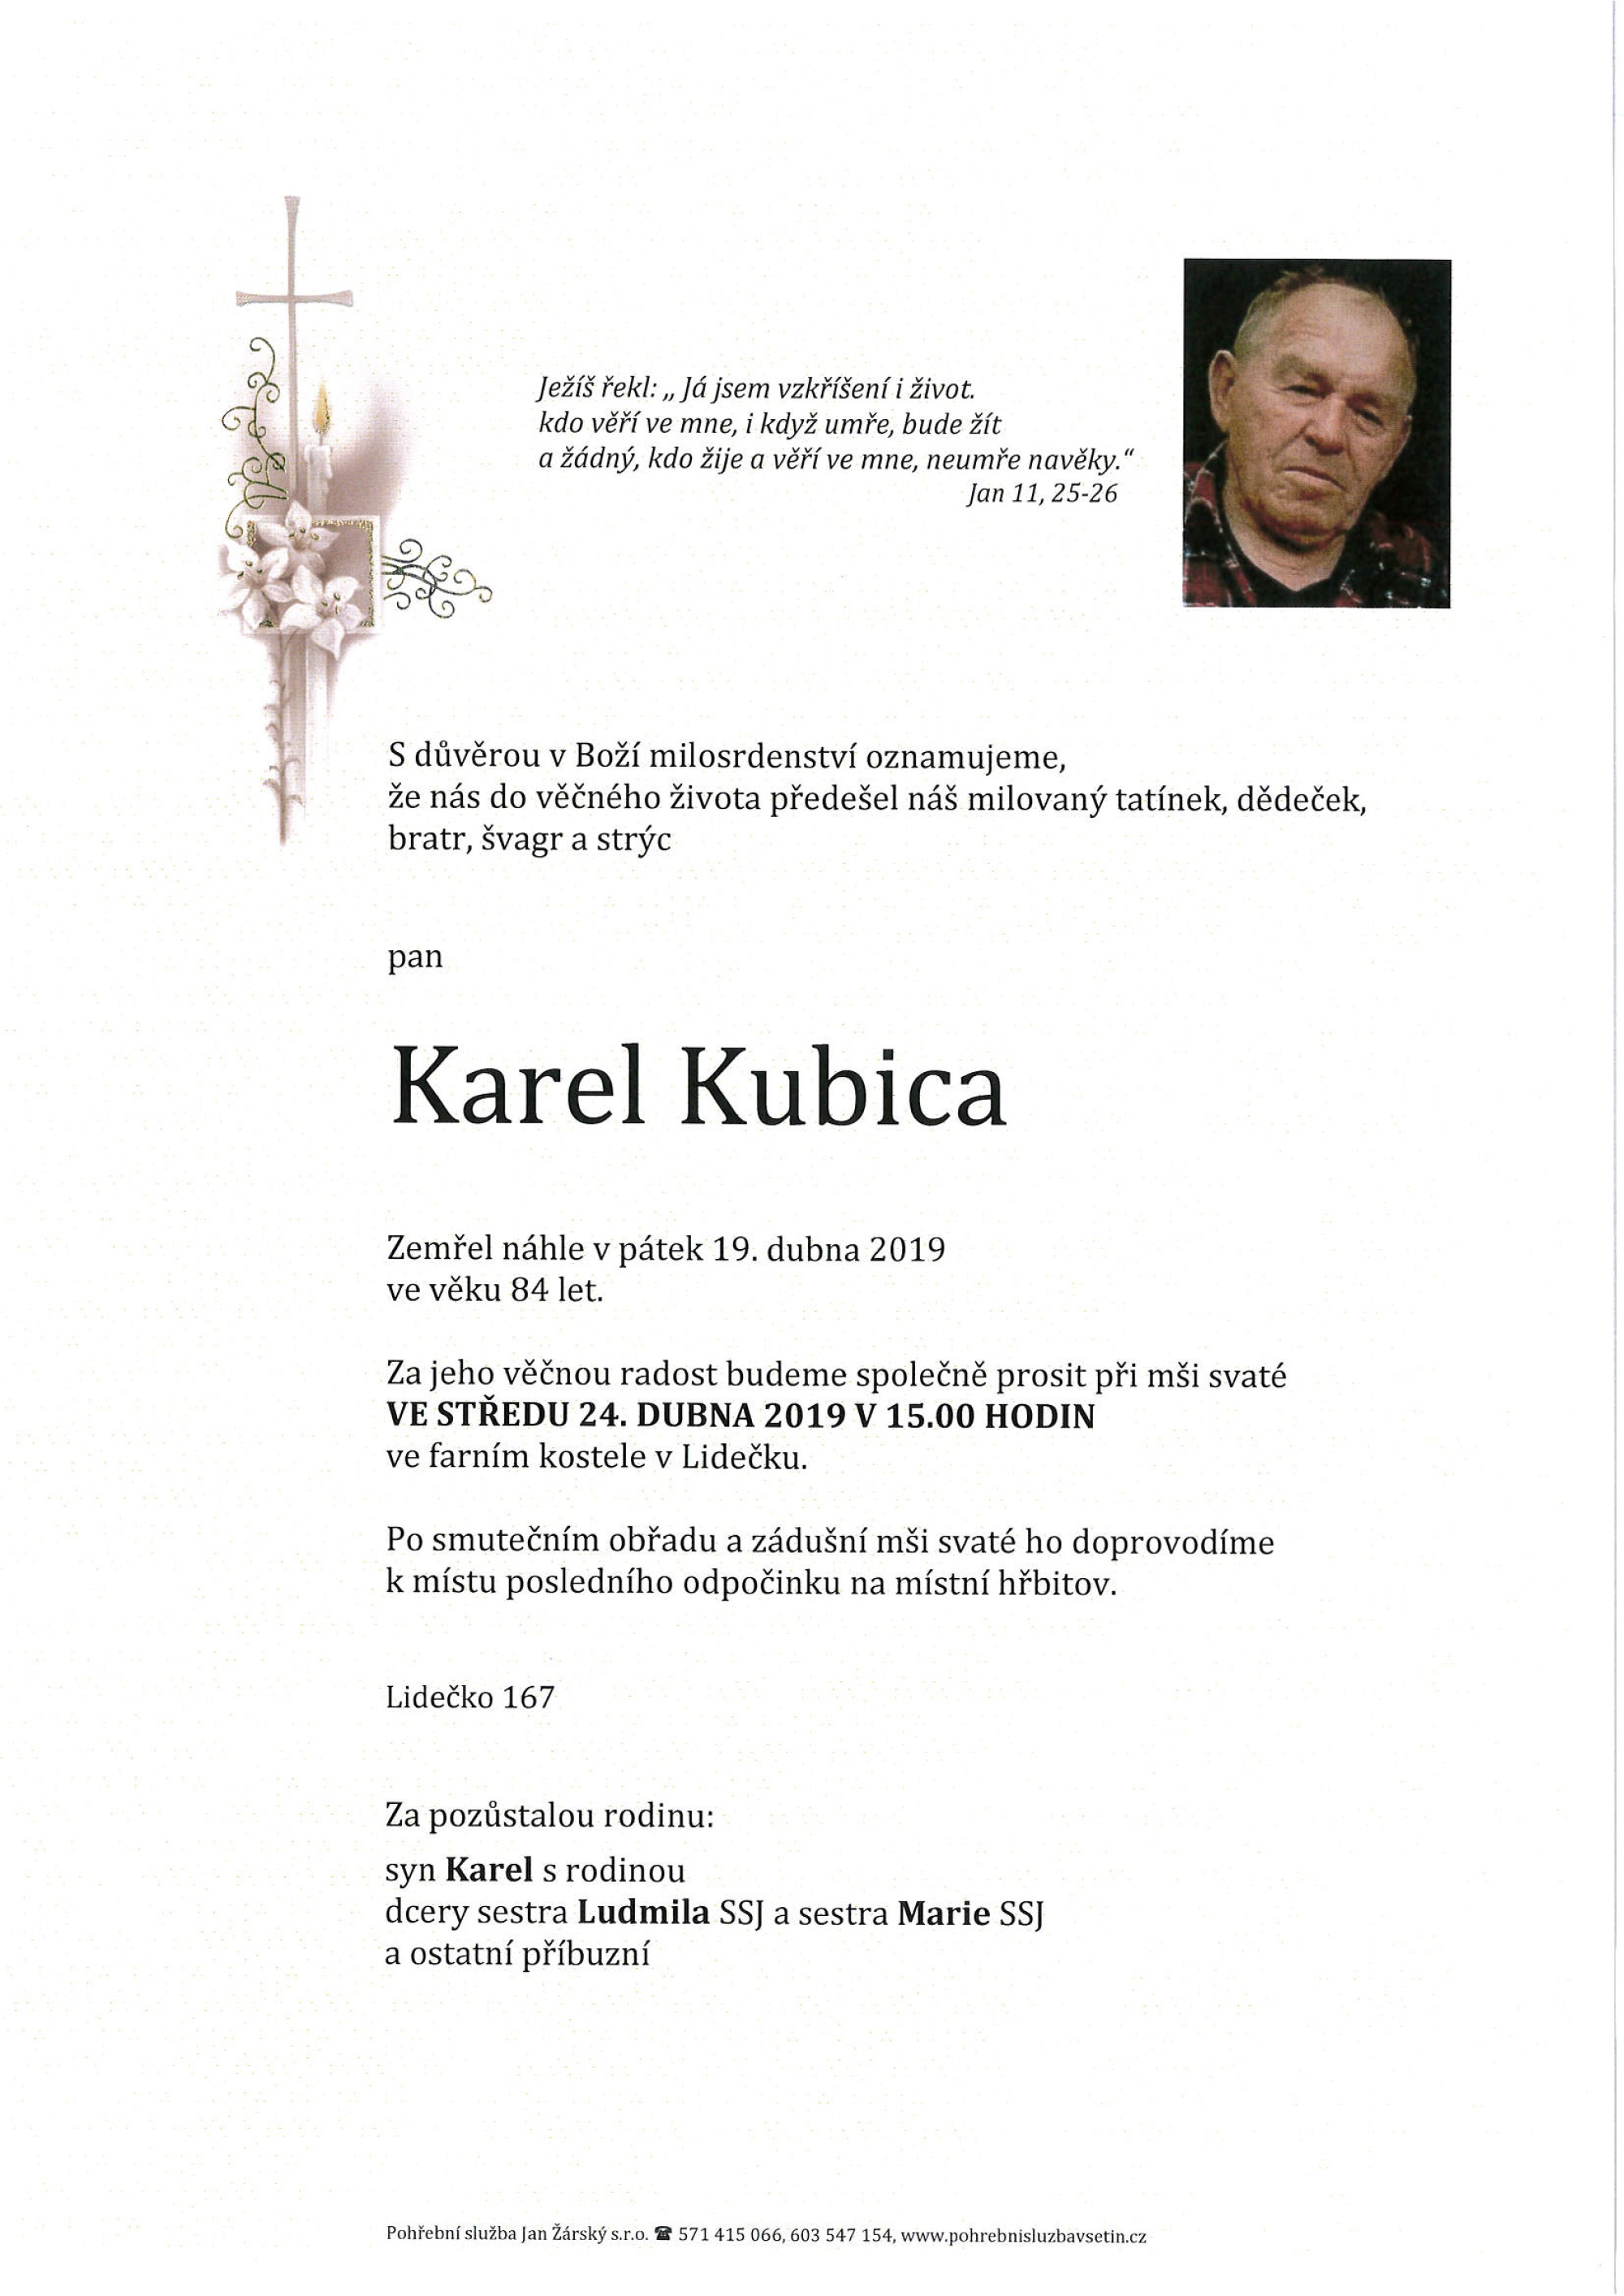 Karel Kubica